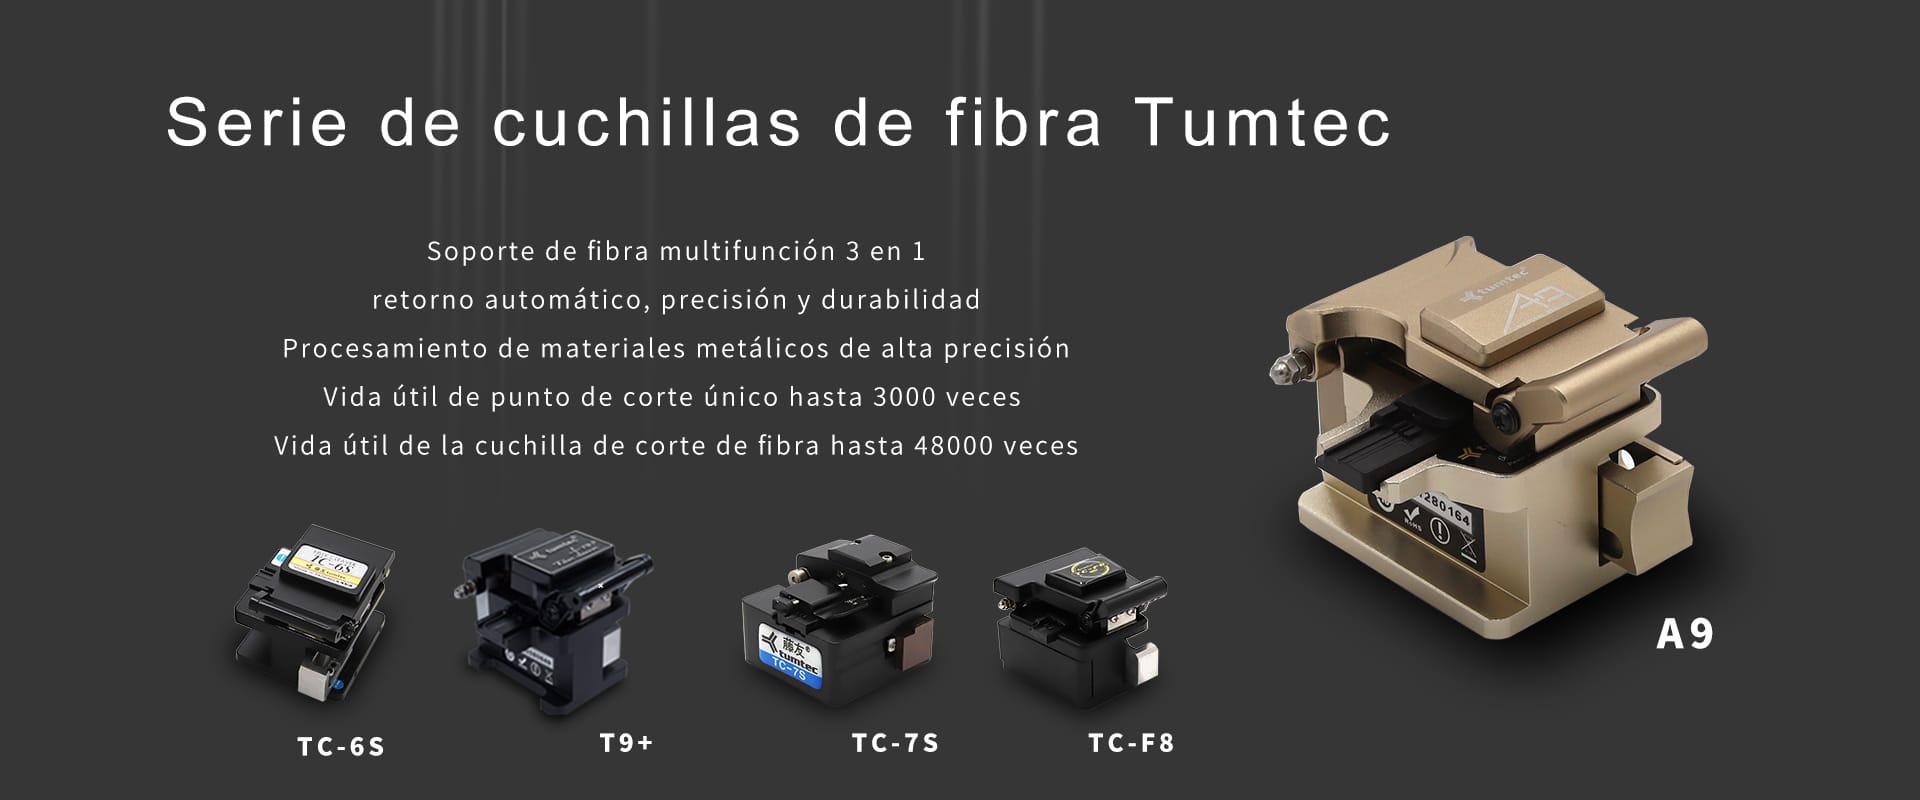 Tumtec optical fiber cleaver